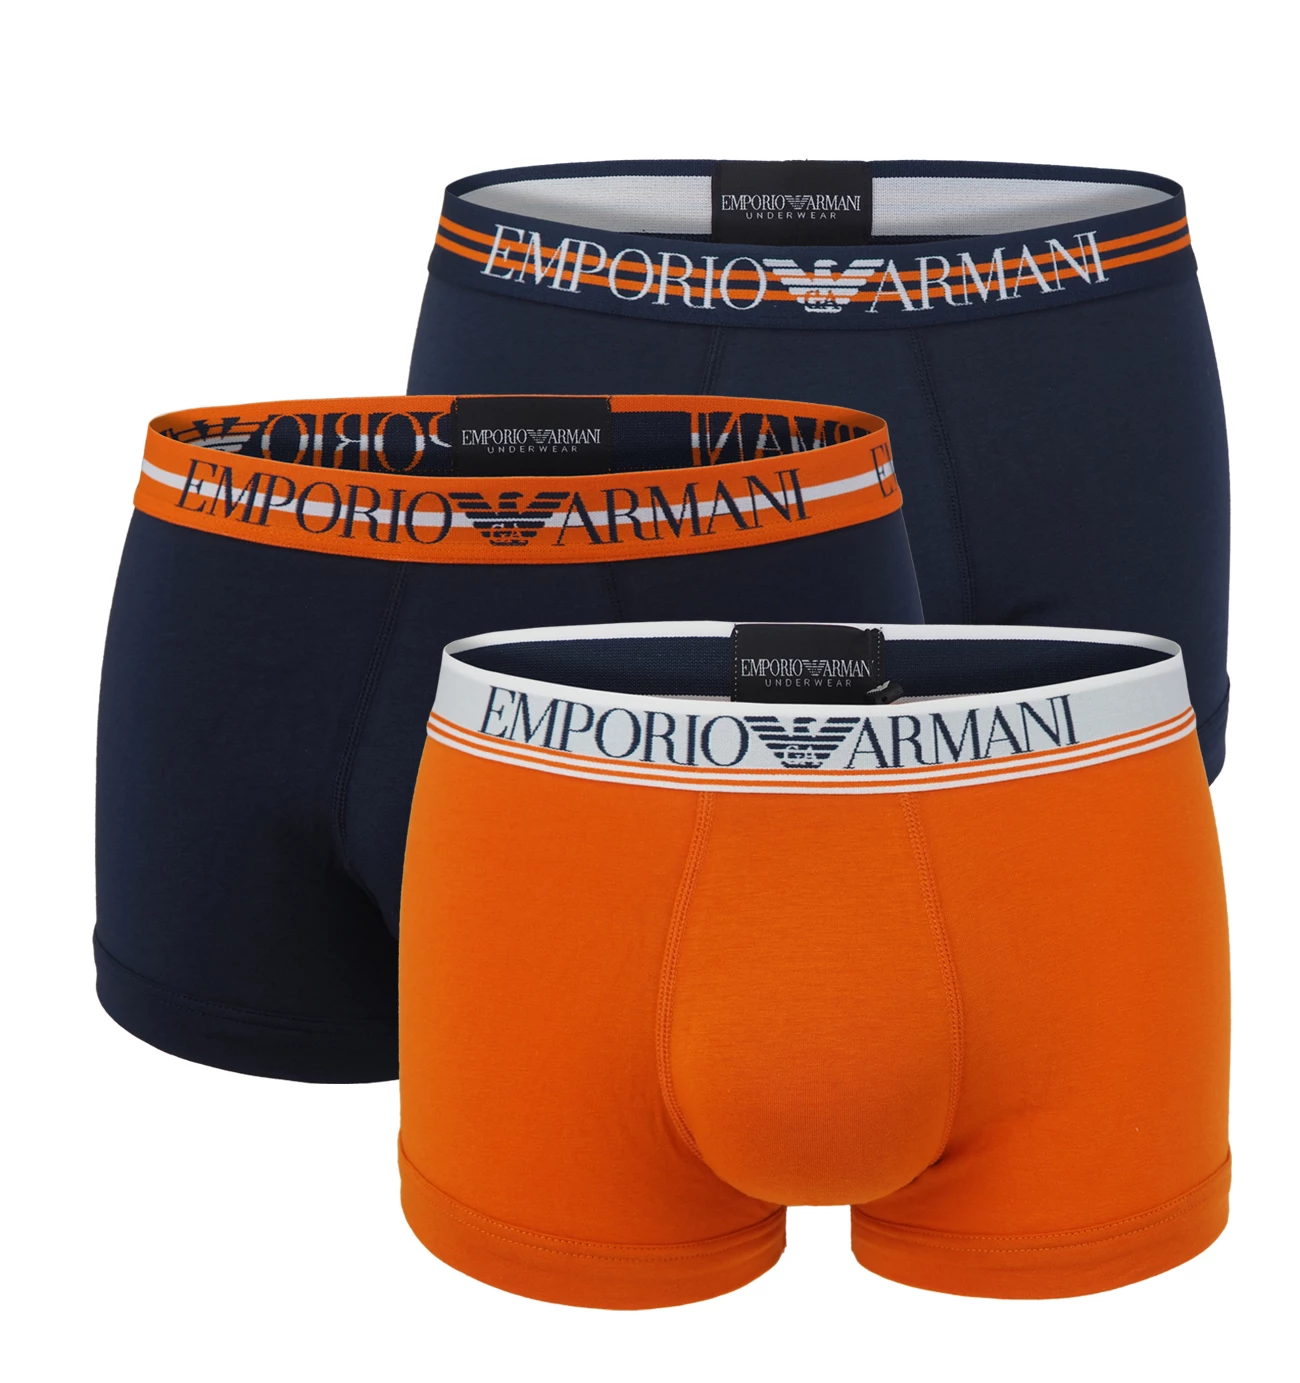 EMPORIO ARMANI - boxerky 3PACK stretch cotton fashion ocra Armani logo - limited edition